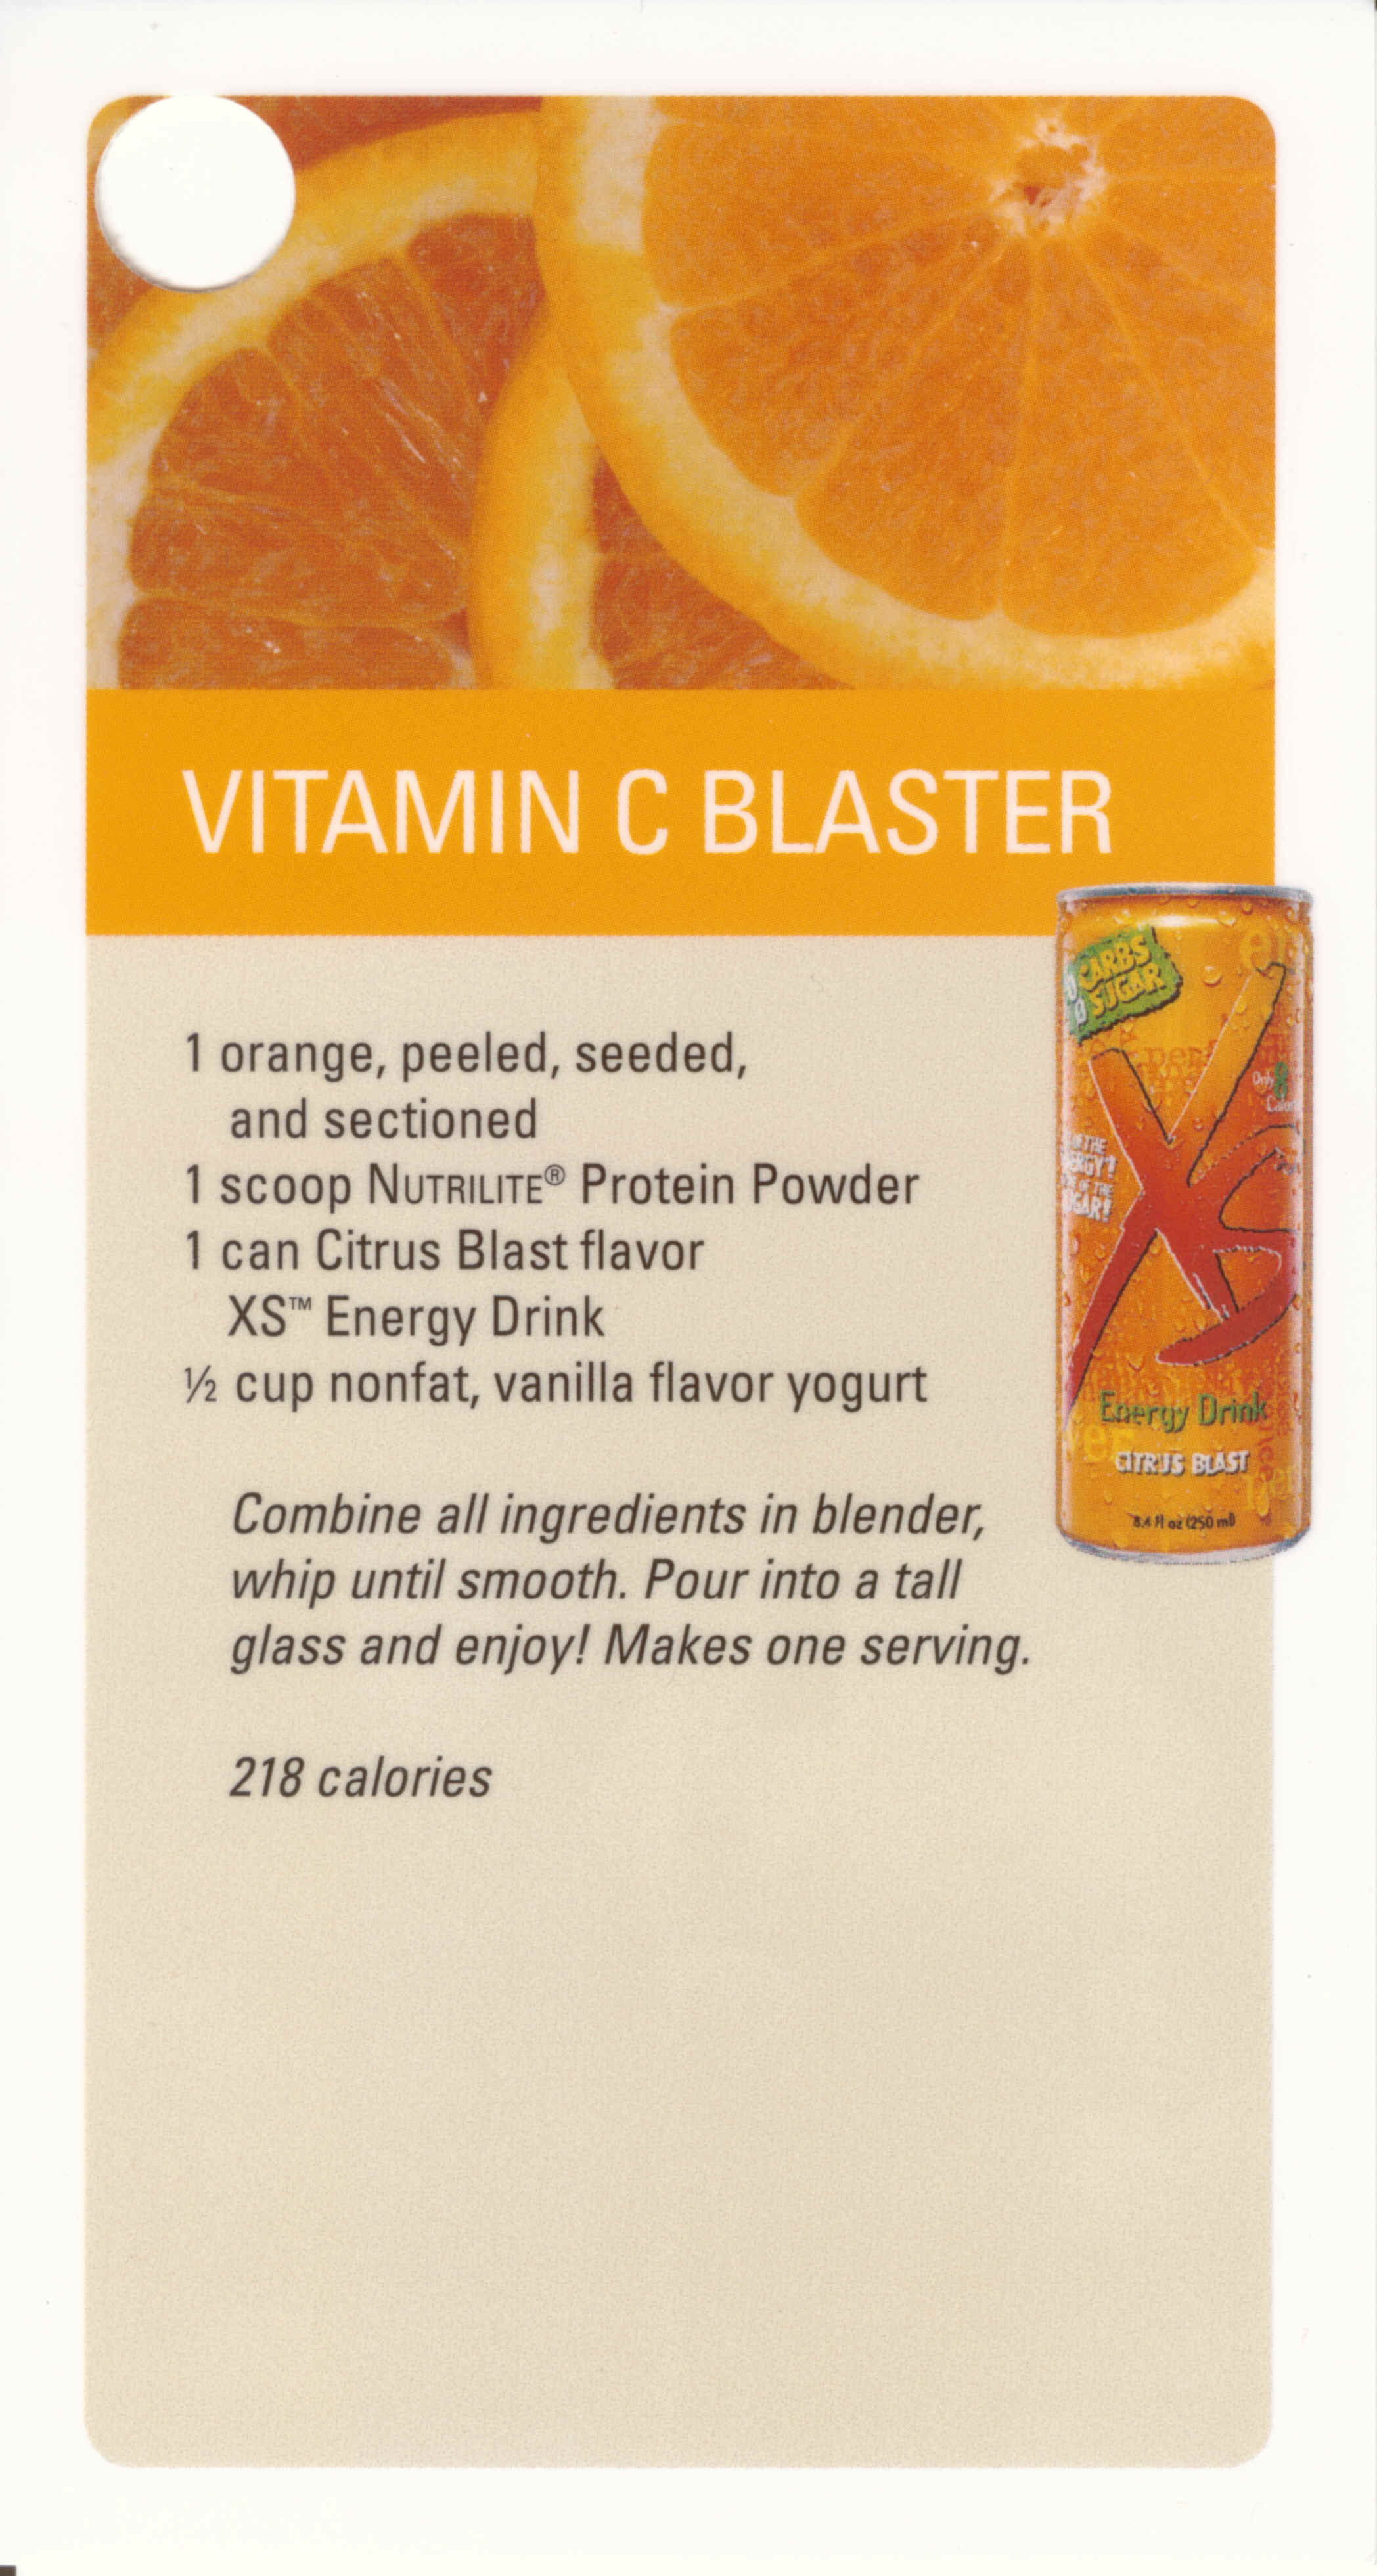 Vitamin C Blaster.jpg (4788418 bytes)